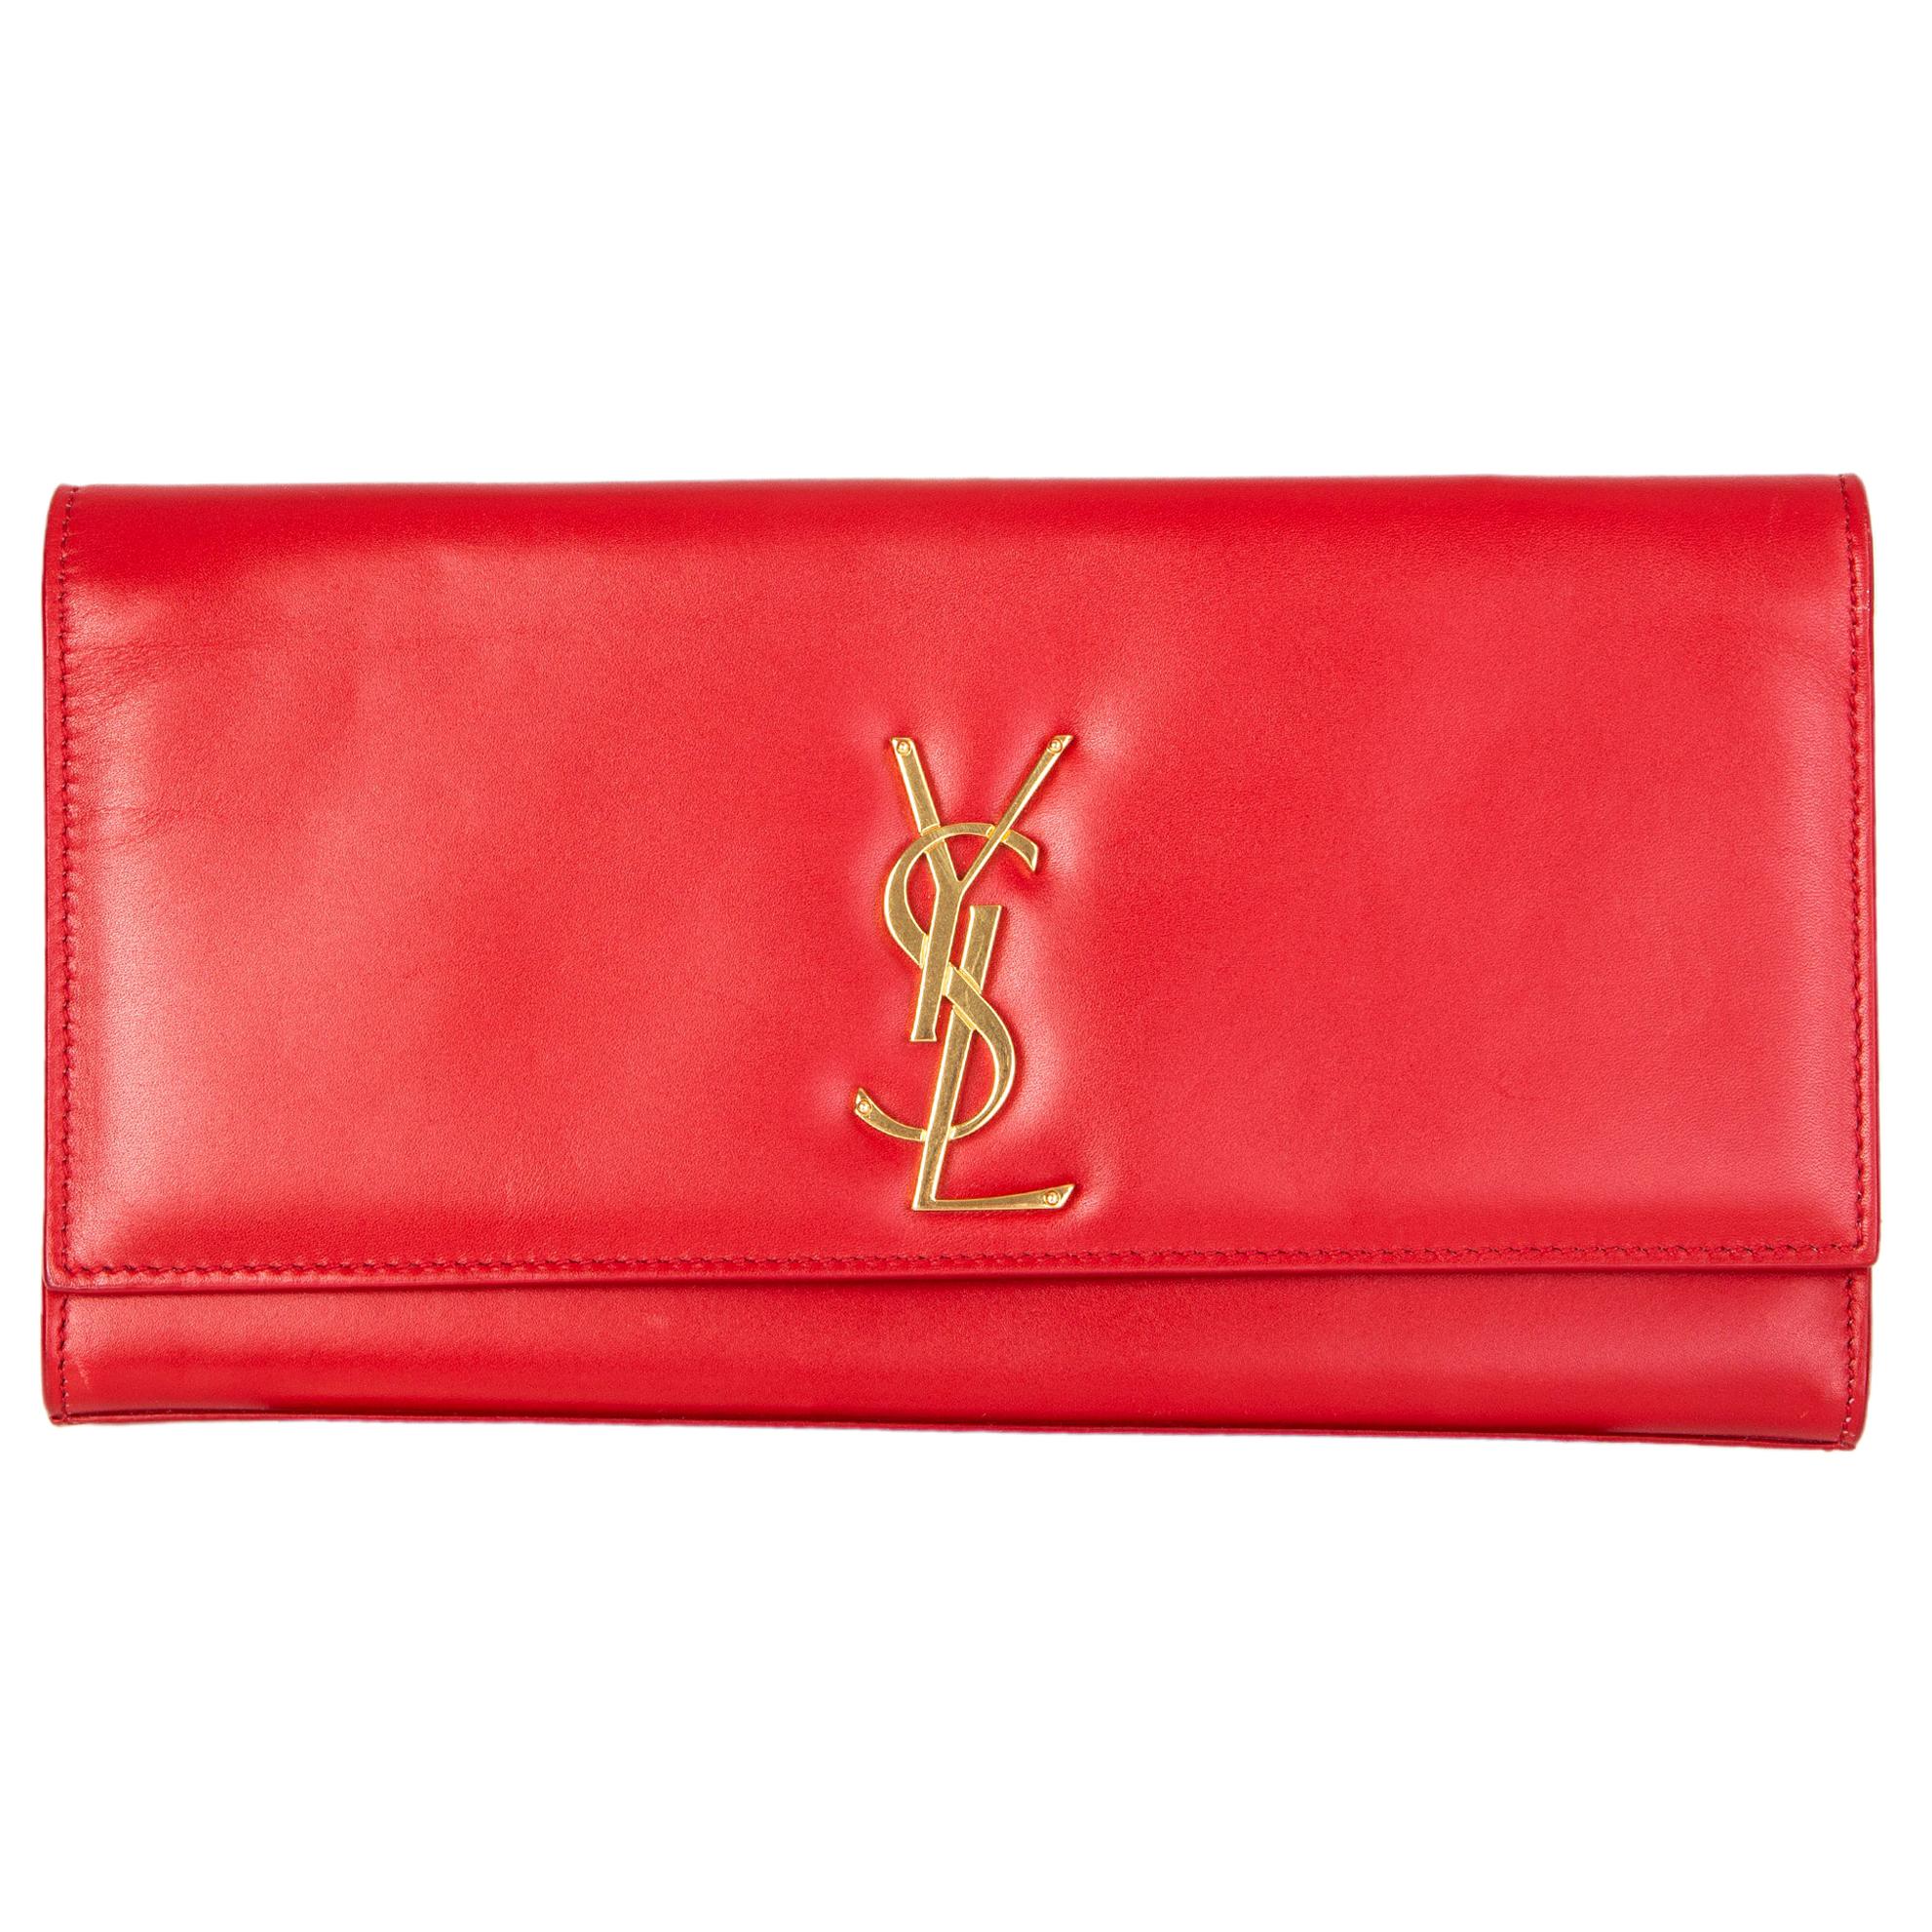 SAINT LAURENT red leather KATE FLAP Clutch Bag